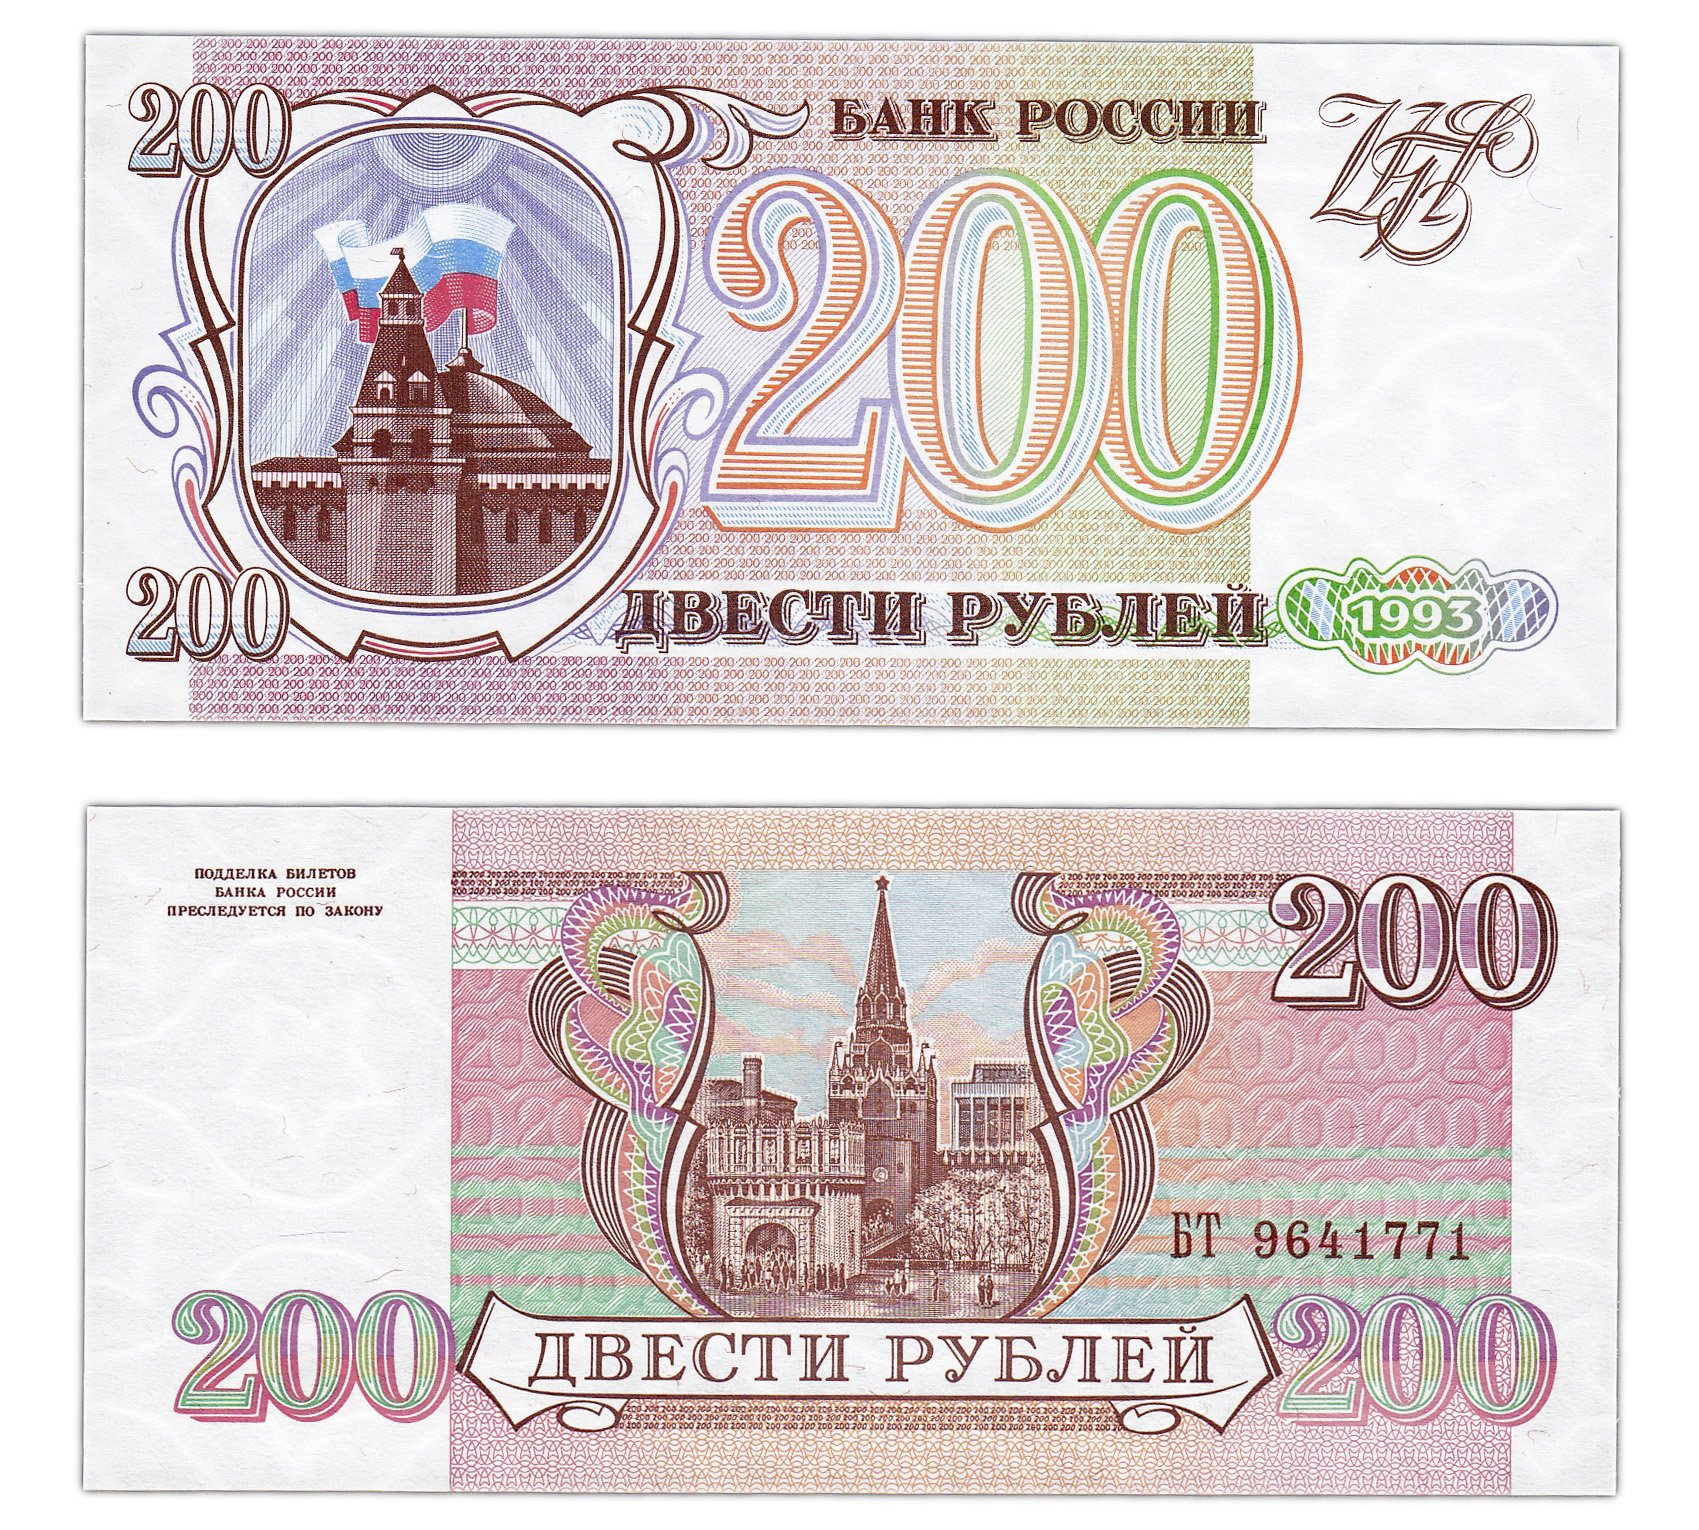 200 рублей бумага. Банкнота 200 рублей 1993. 200 Рублей 1993 года. Купюра 200 рублей 1993. Купюра 200 рублей 1993 года.